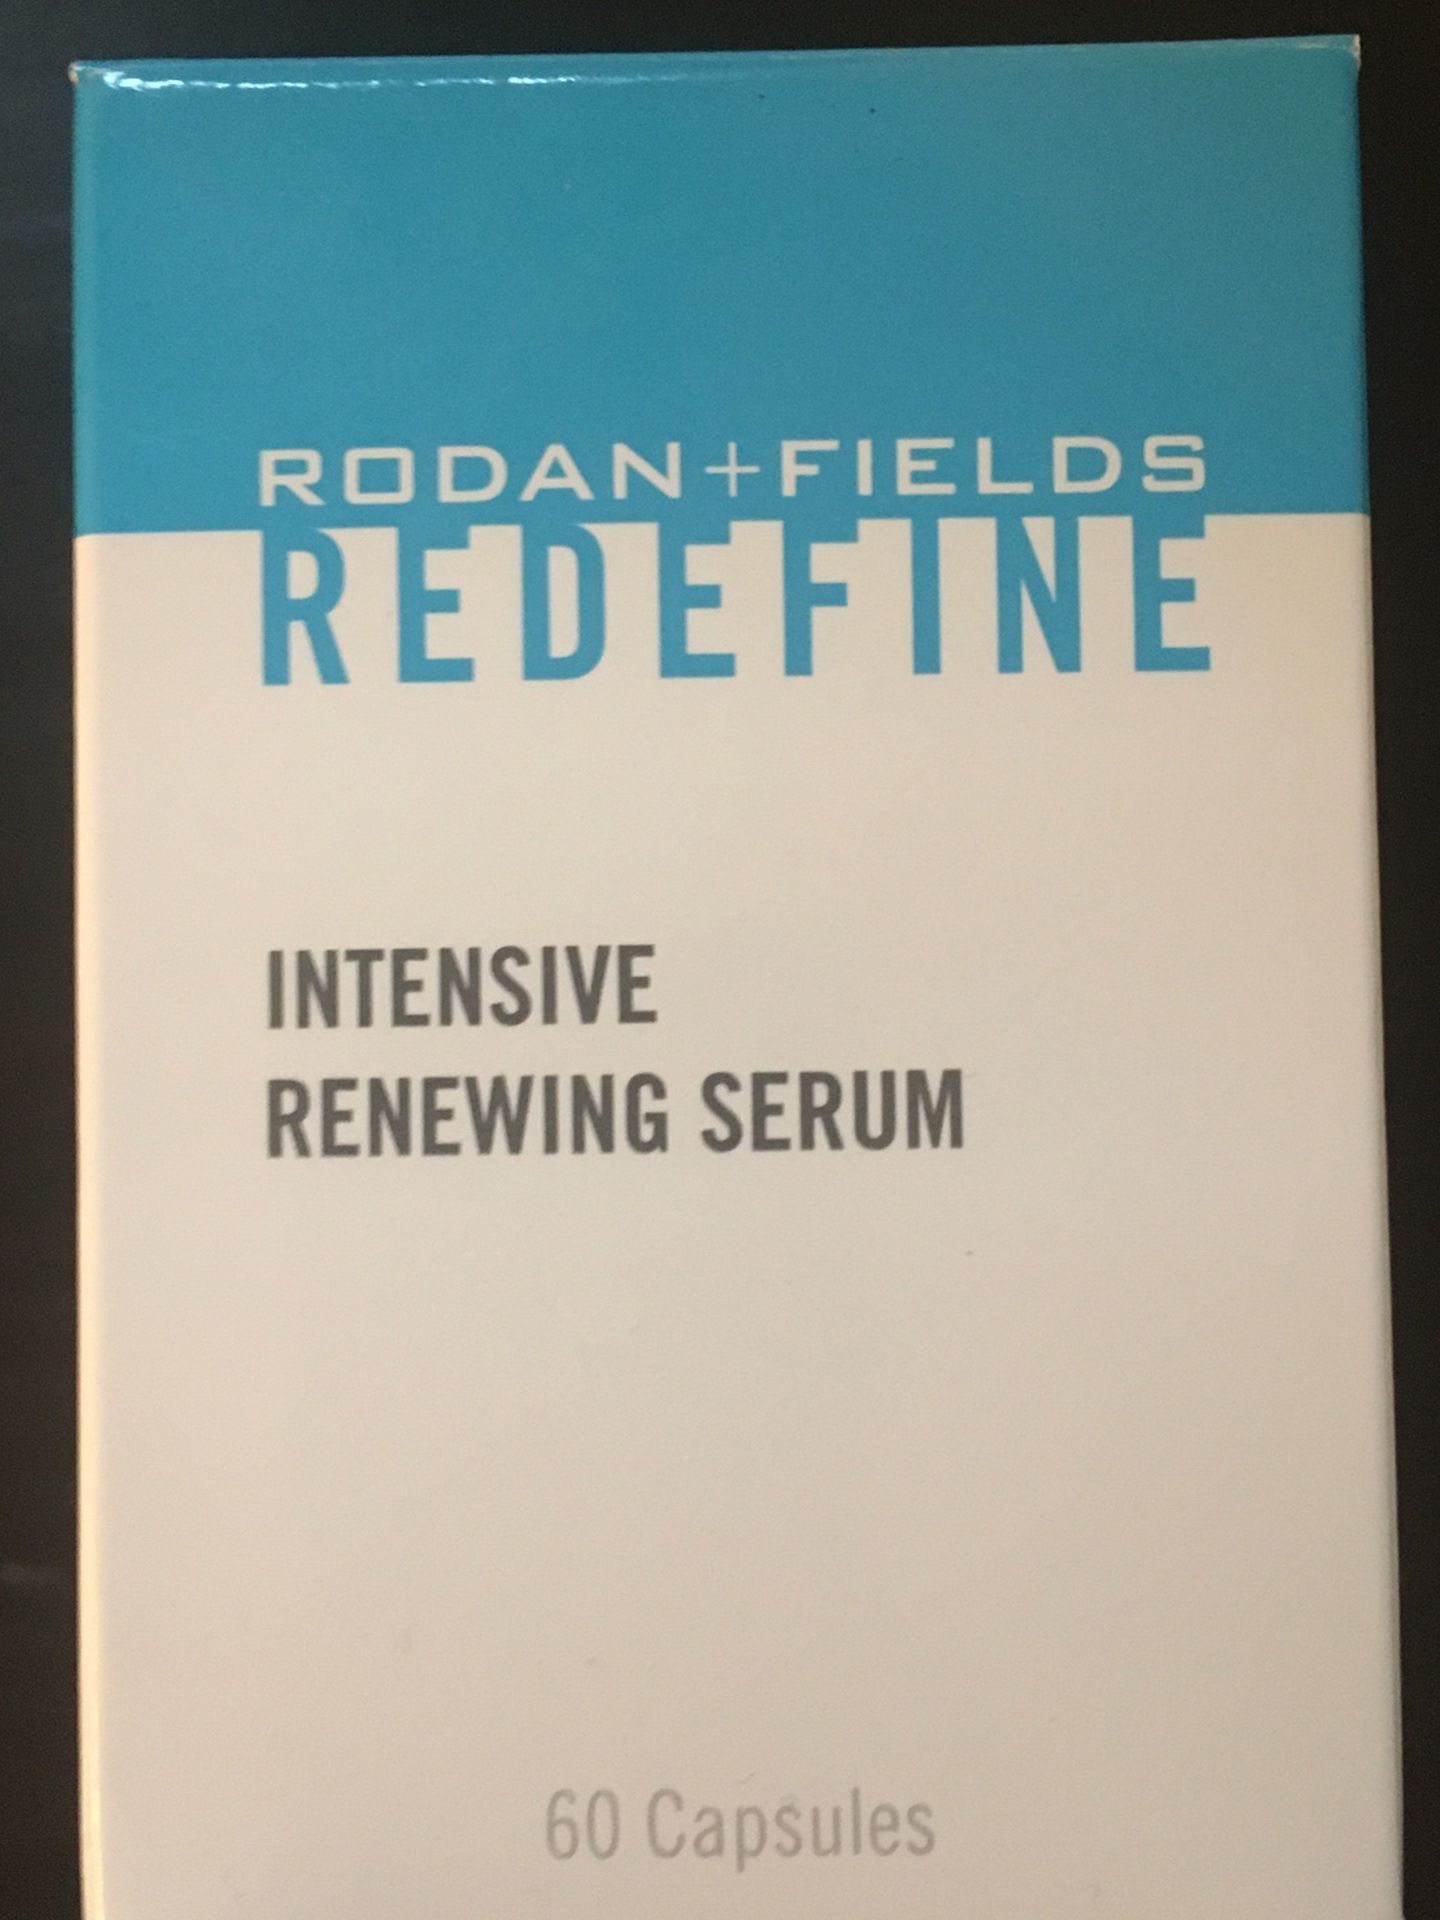 Rodan+Fields Redefine Intensive Renewing Serum, $75